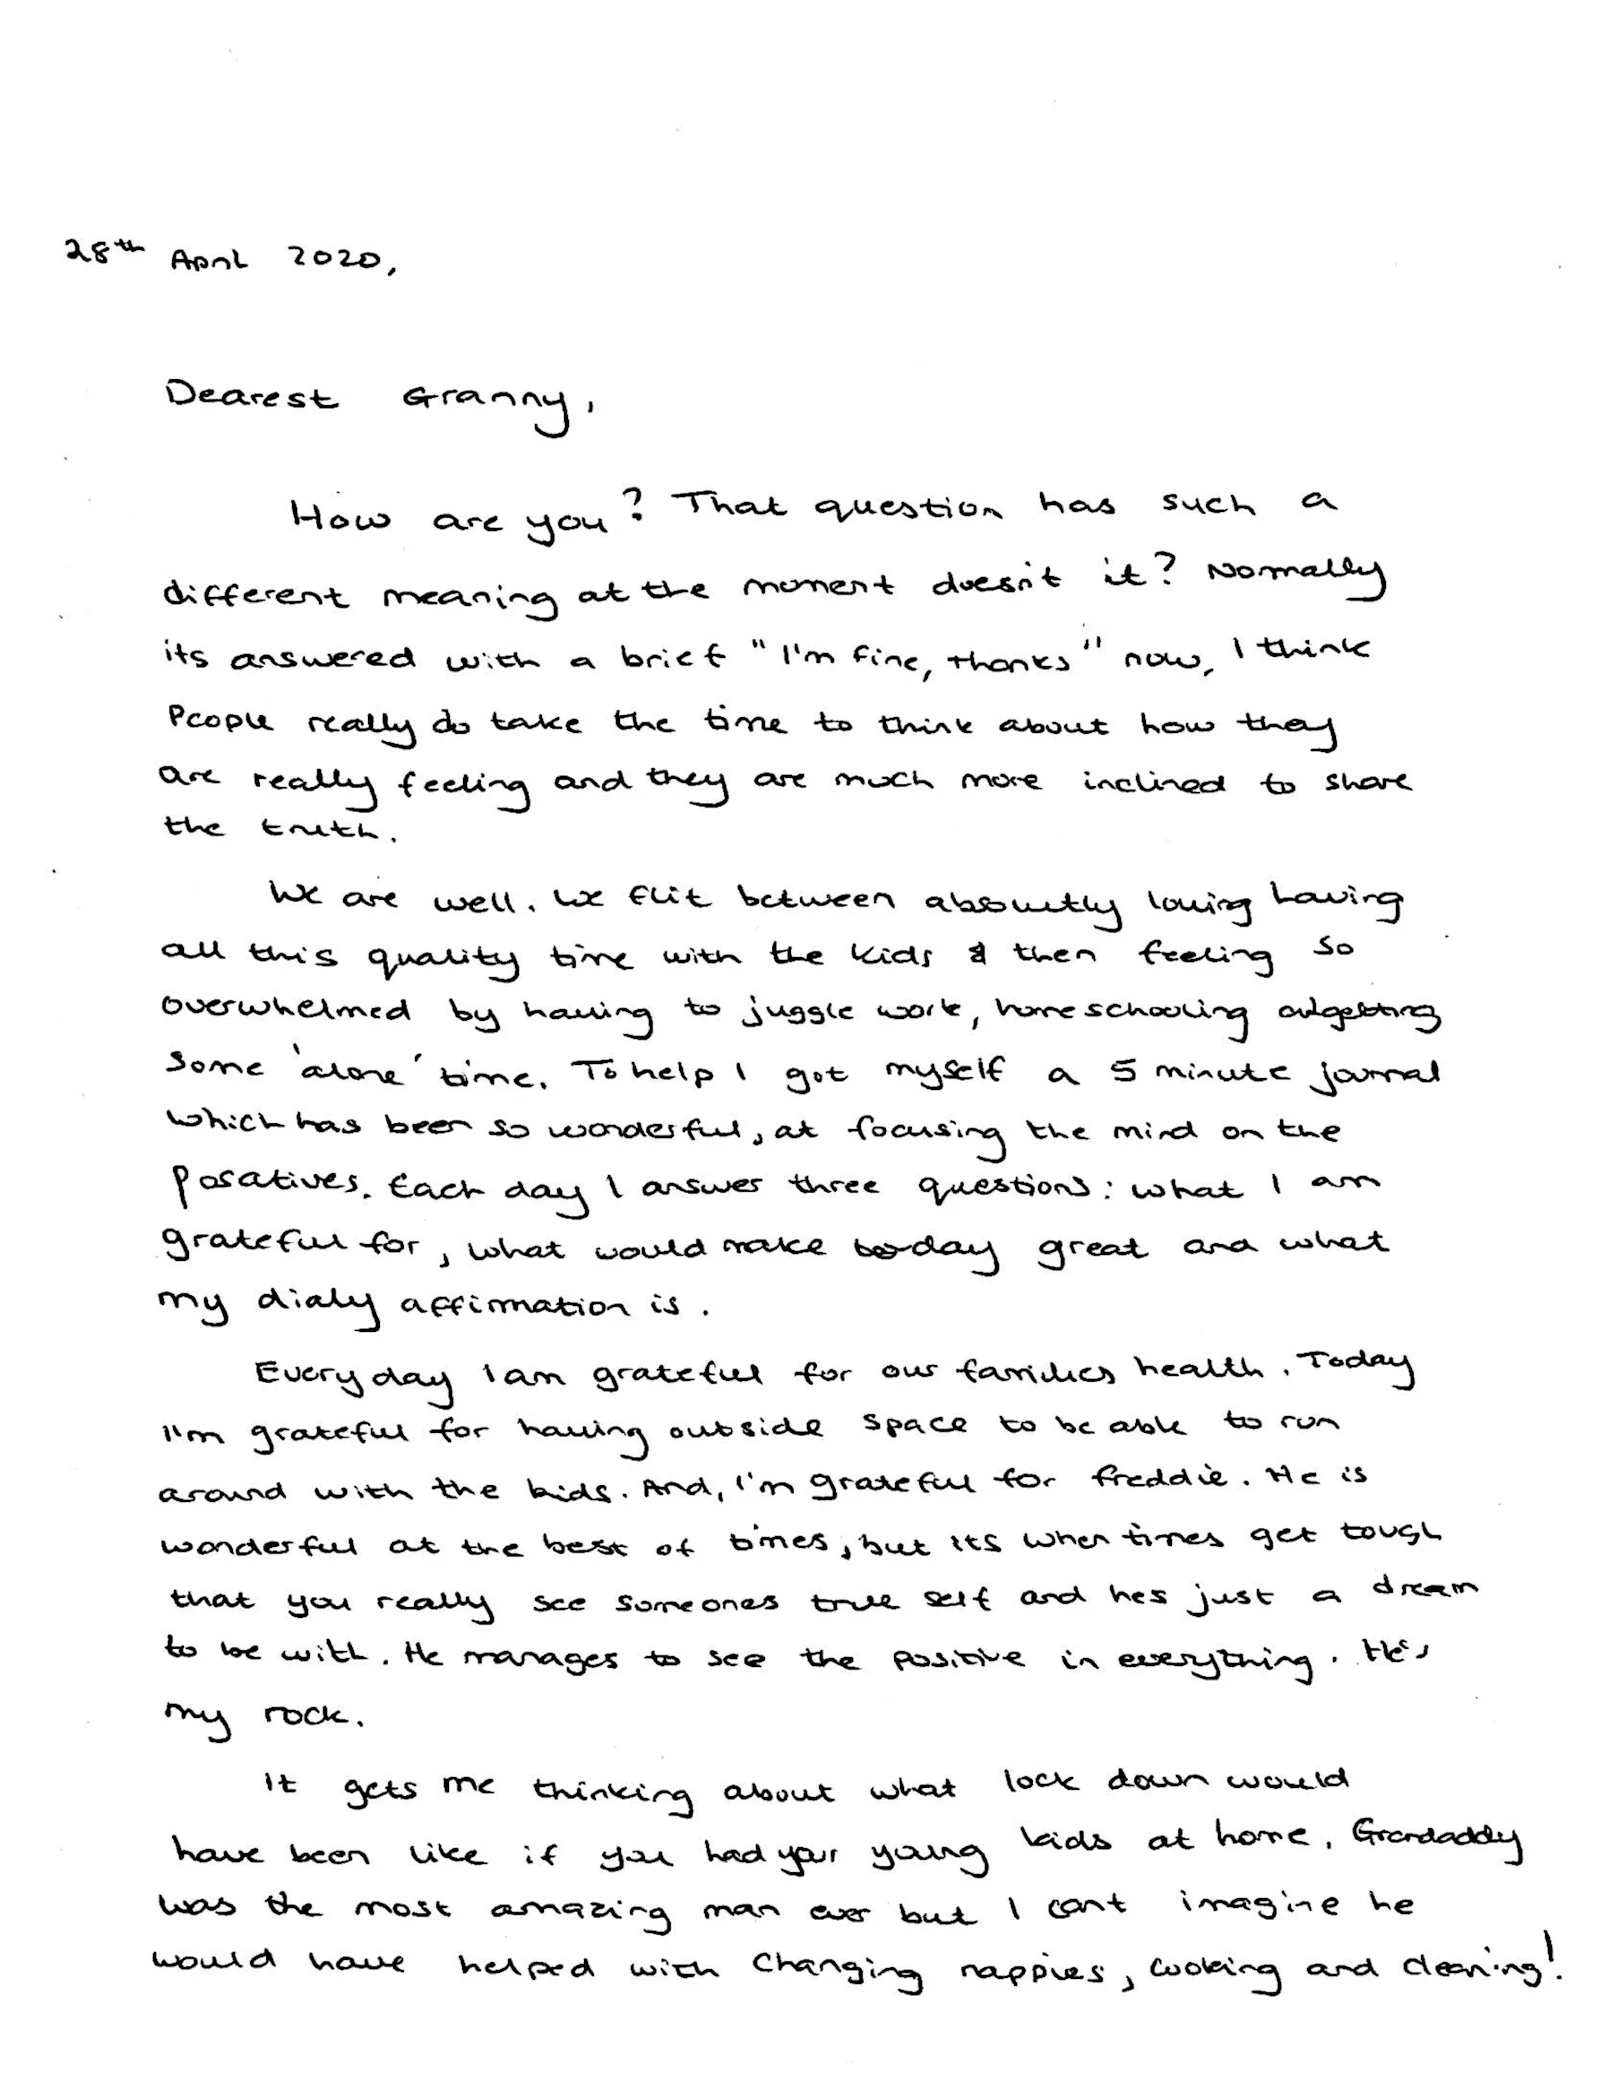 Holly Branson's written letter to Eve Branson